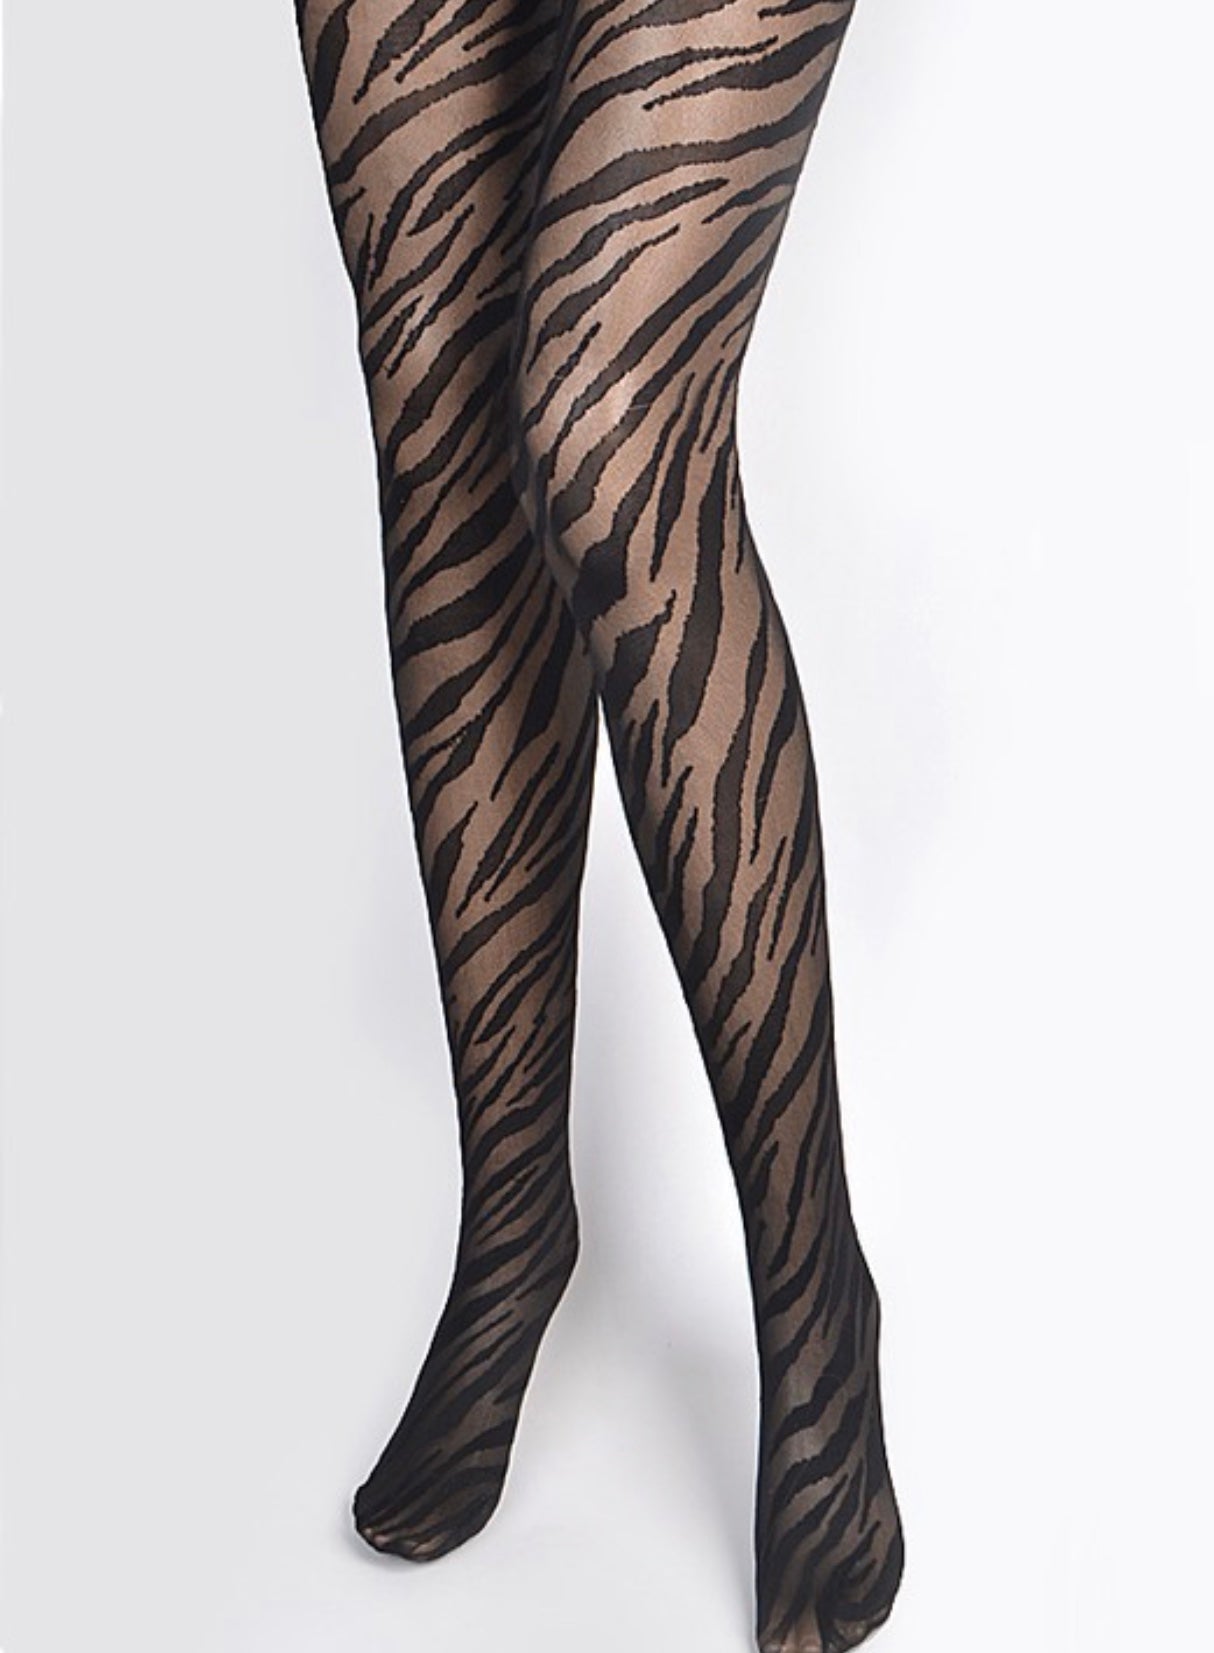 Zebra Print Stockings - ggfiona